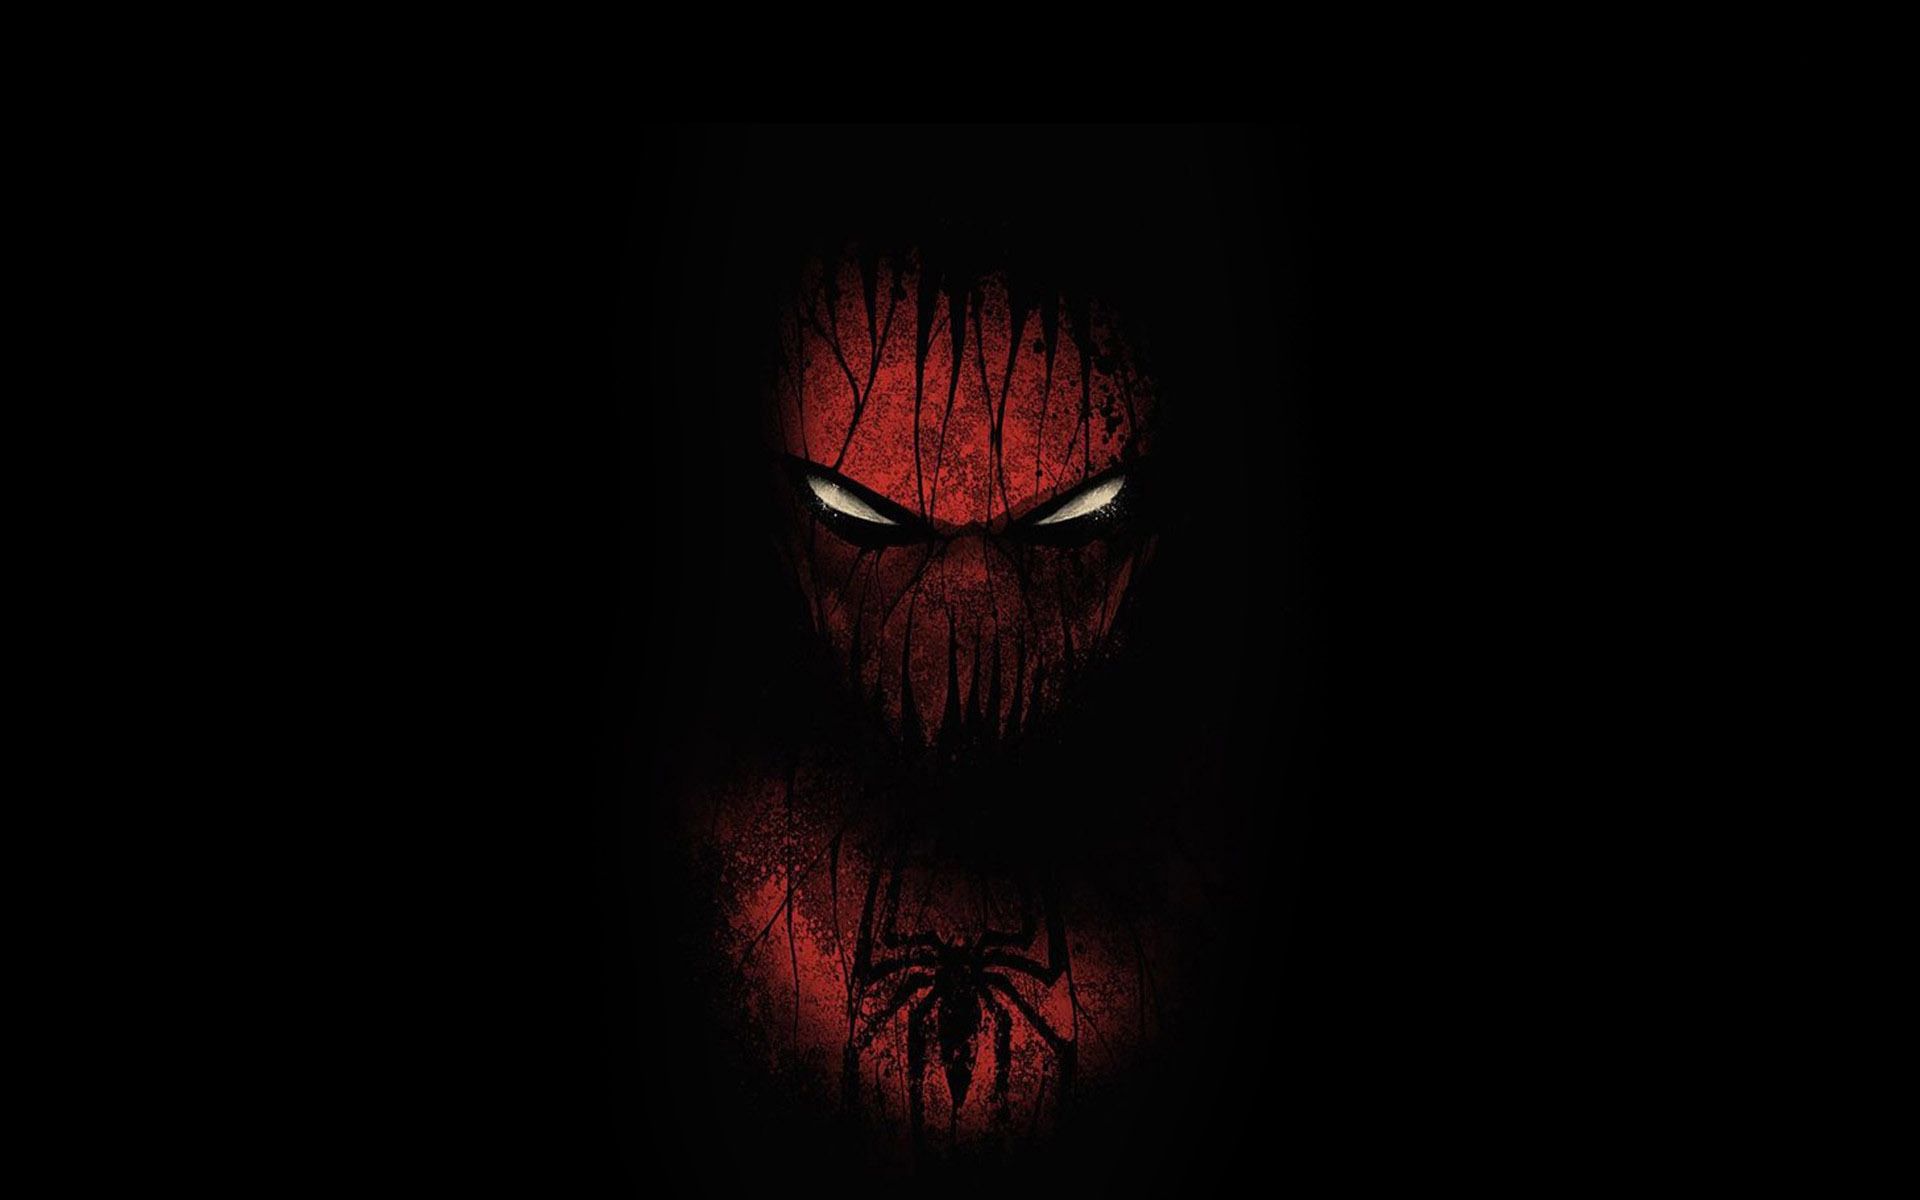 Spiderman Image Free Download